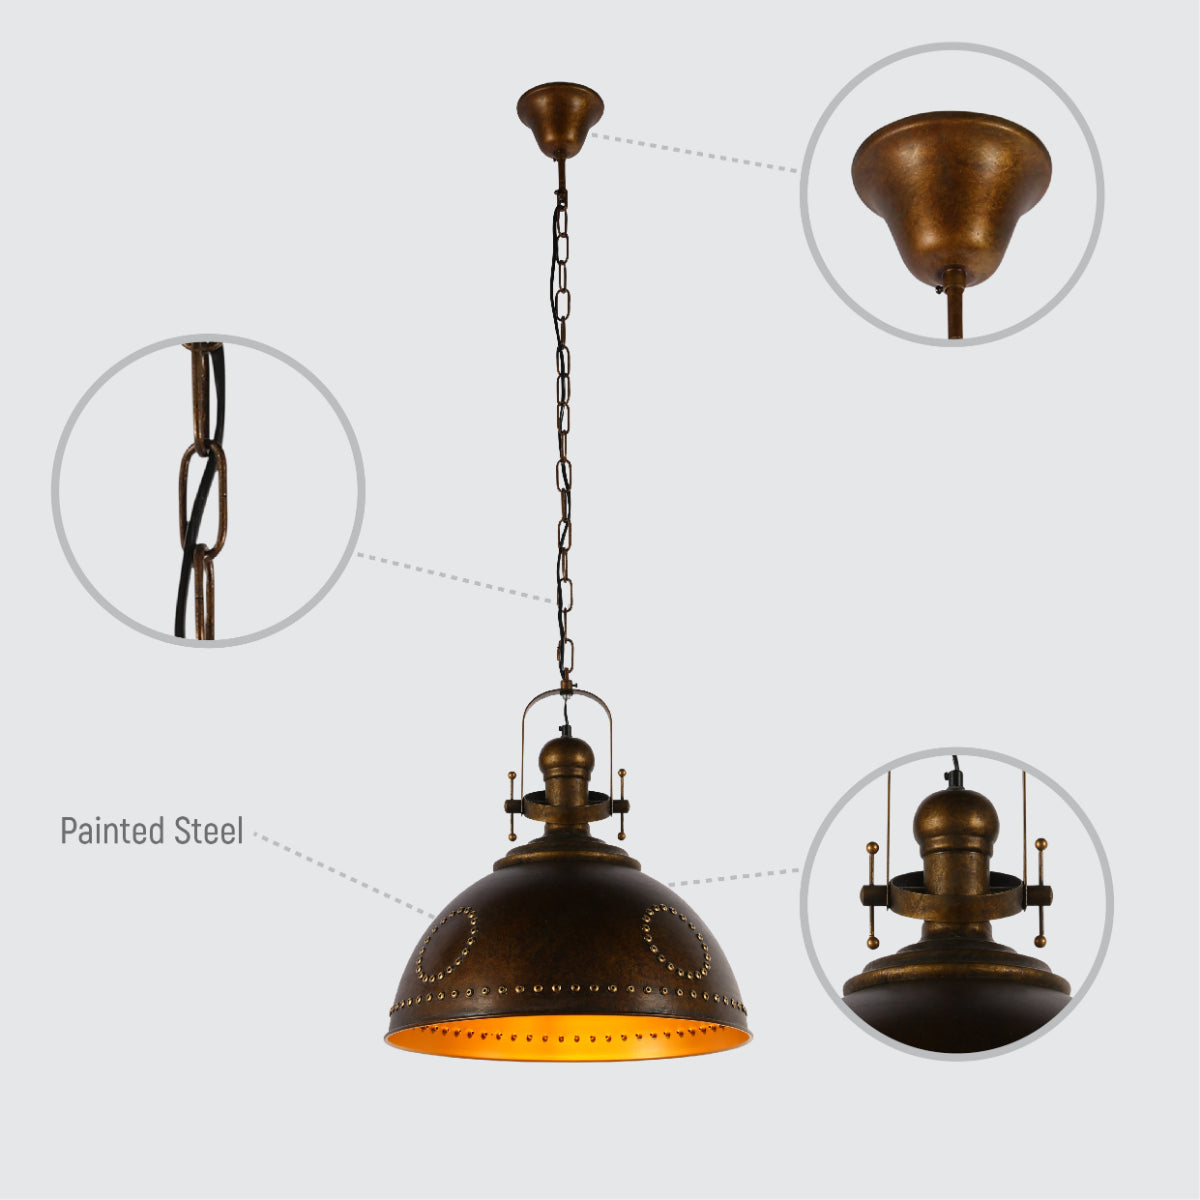 Lighting properties of Vintage Industrial Dome Pendant Light with Rivet Detailing 150-19032